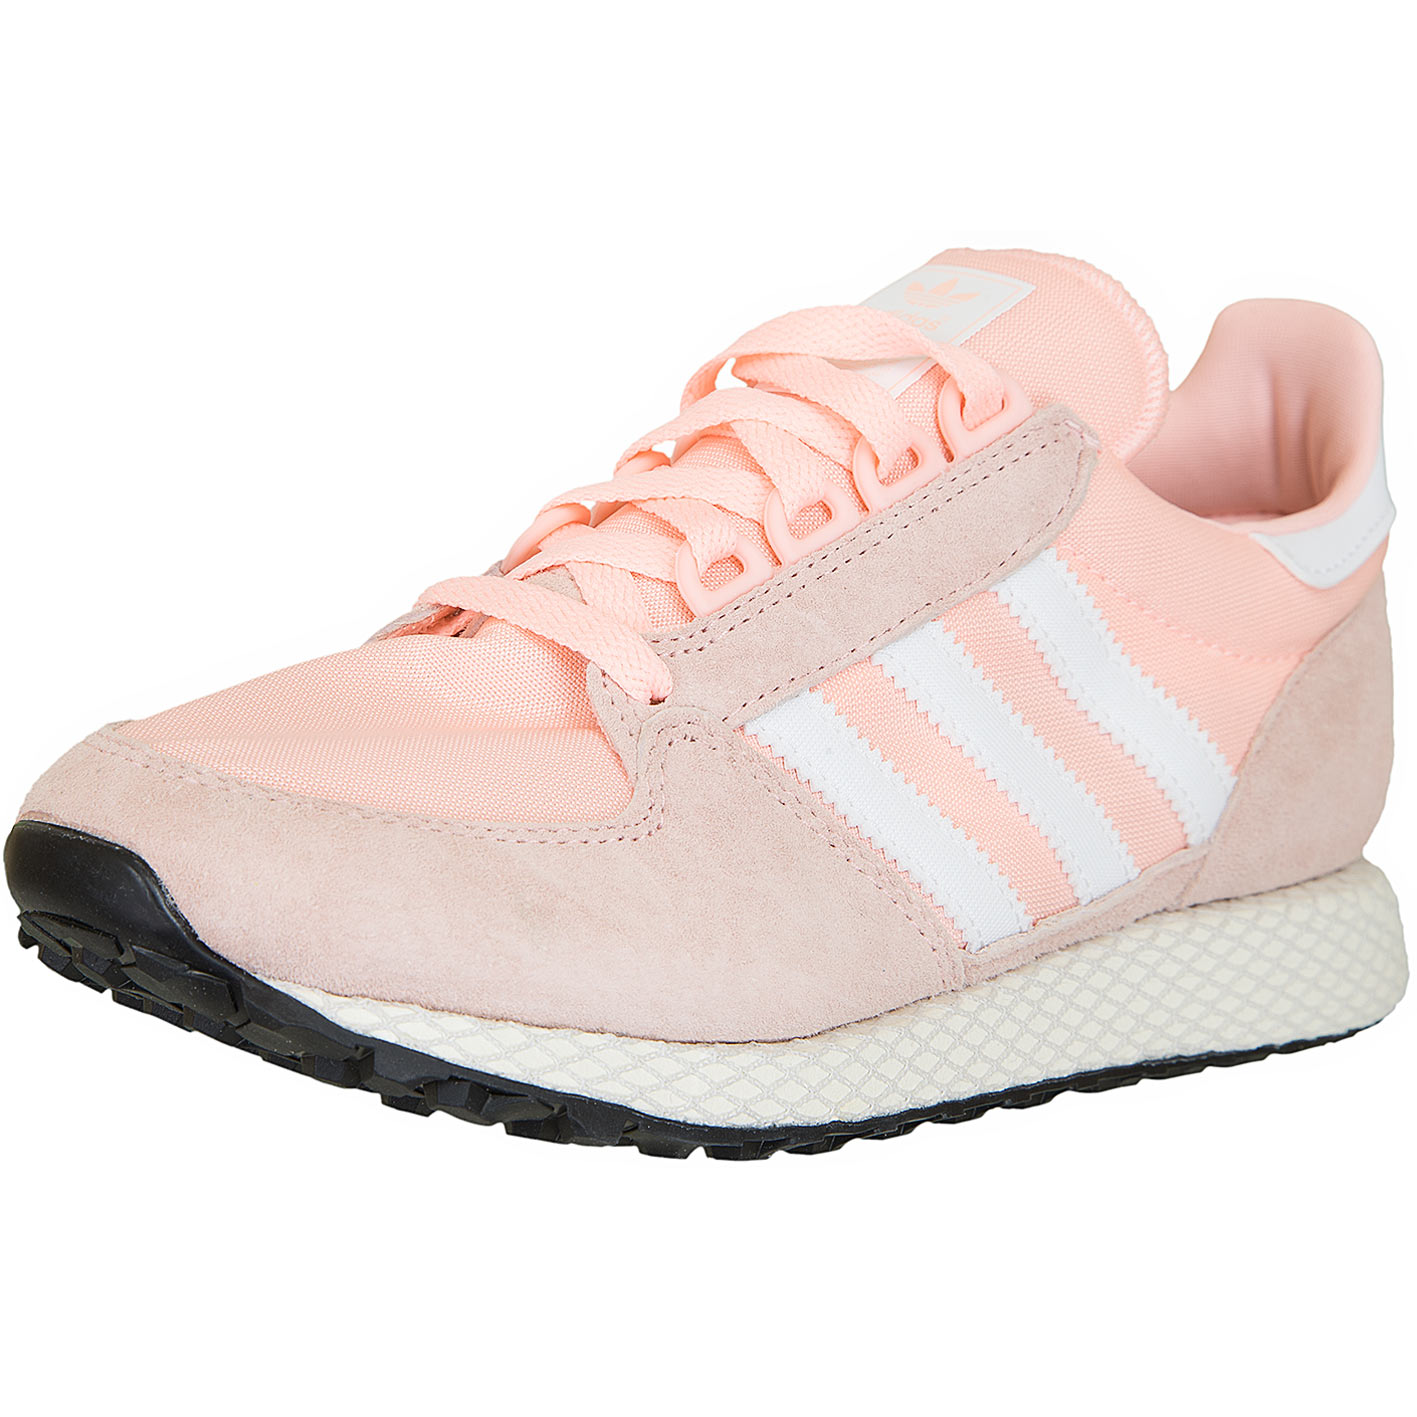 ☆ Adidas Originals Damen Sneaker Forest Grove rosa/weiß - hier bestellen!